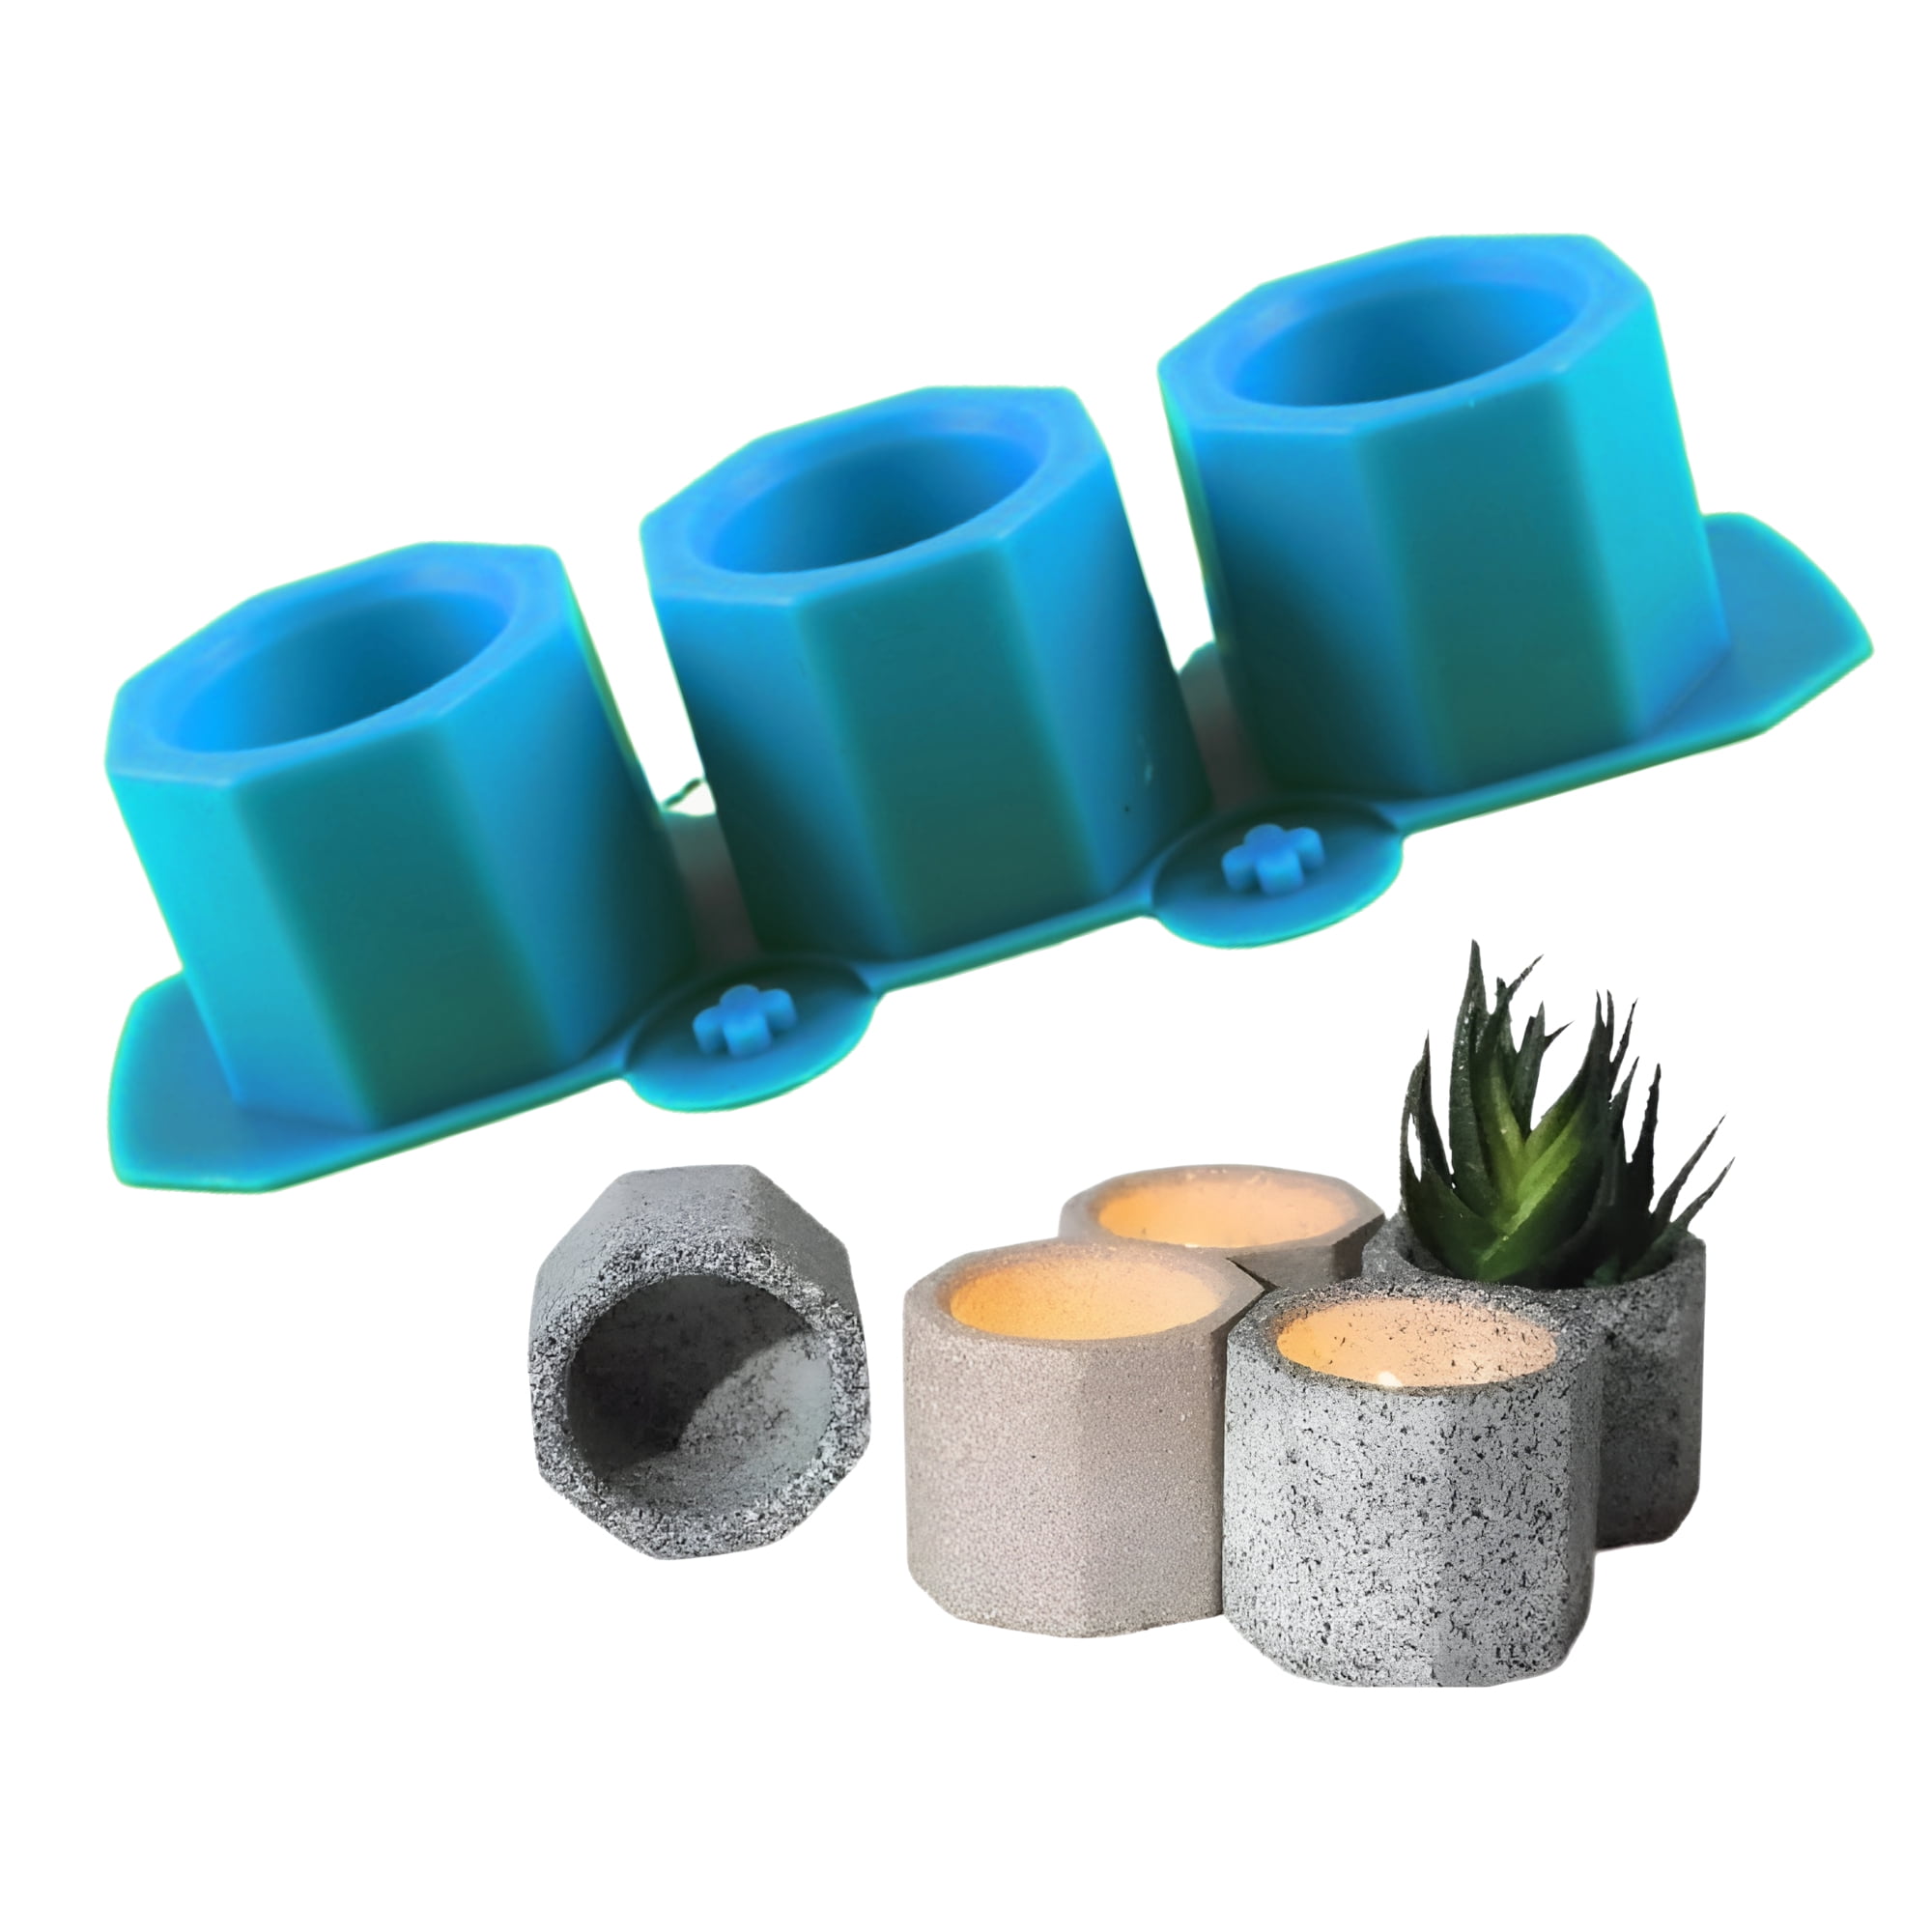 Molde de silicona para macetas y decoración de yeso cemento, resina, concreto. plantillas de figura para maceta (Hexagonal azul ) ecomlab molde maceta